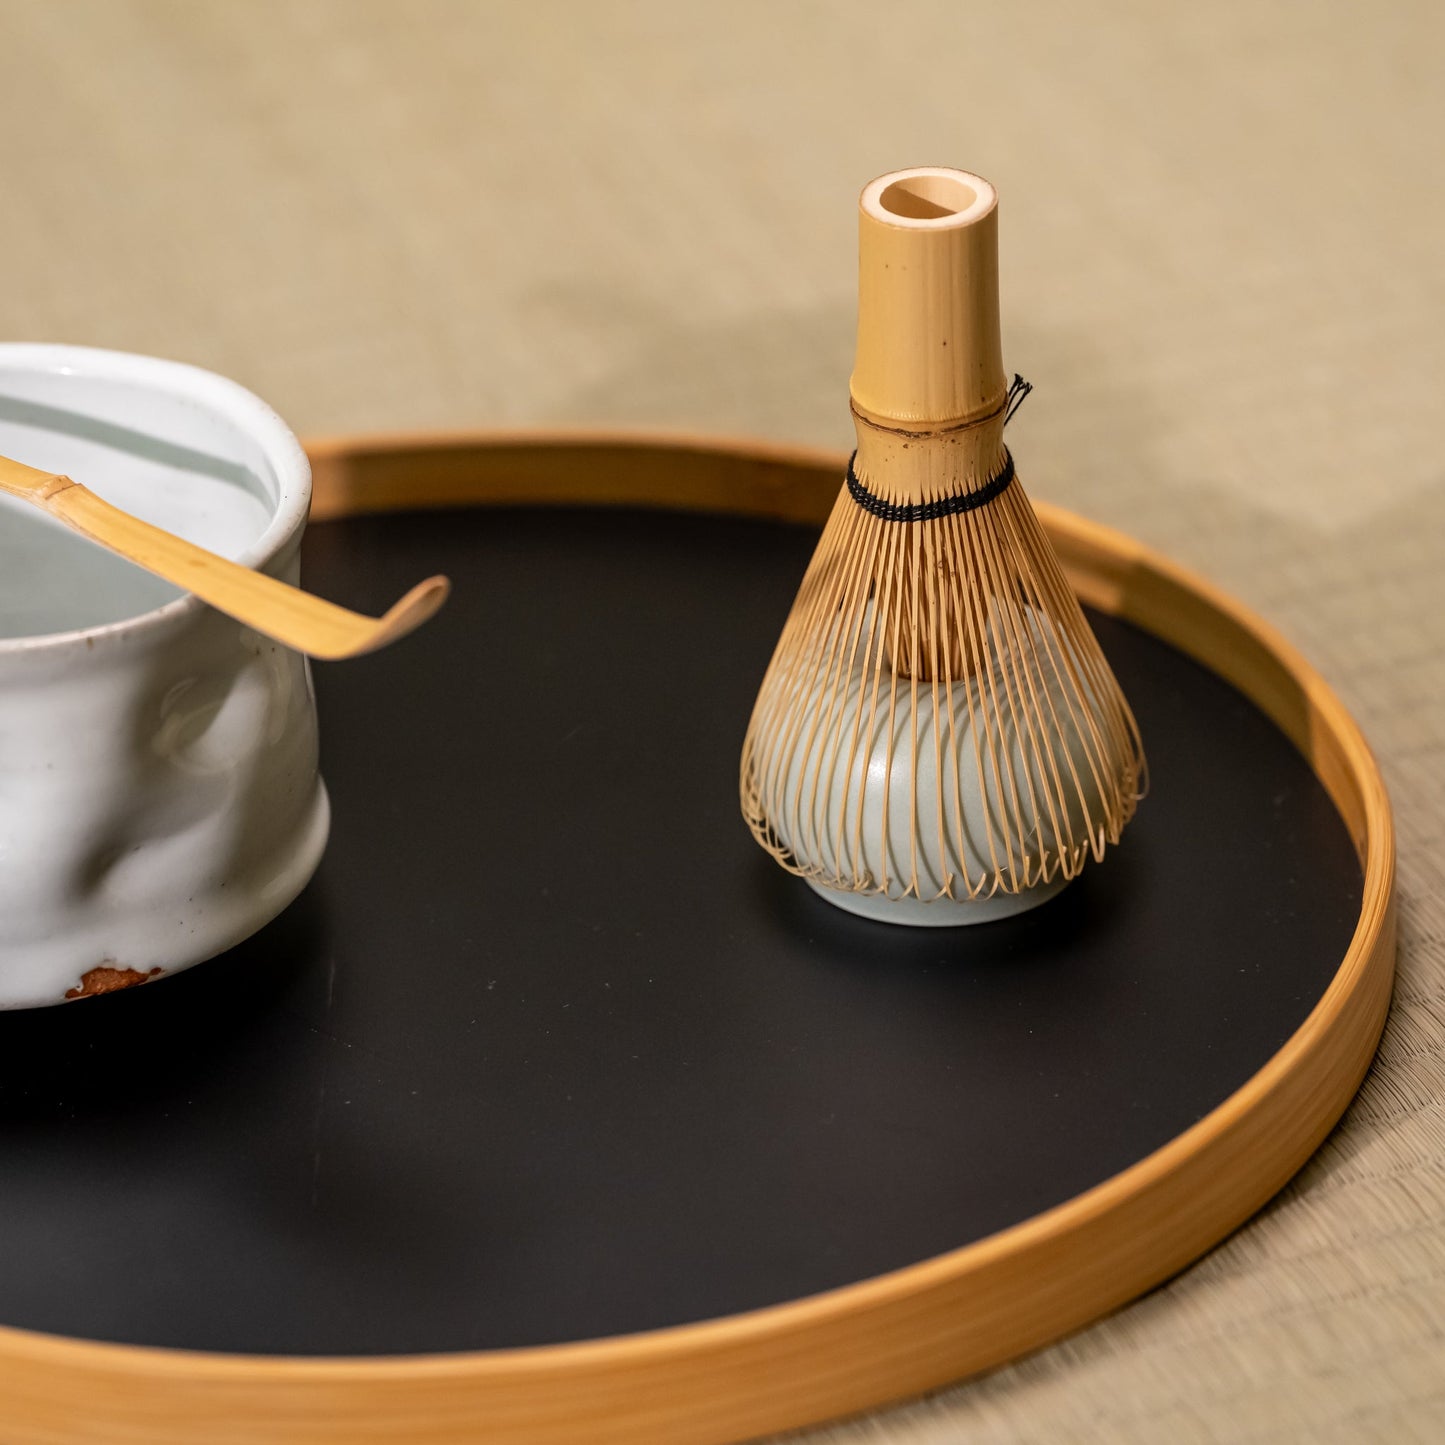 A Japanese tea set on a bamboo tray